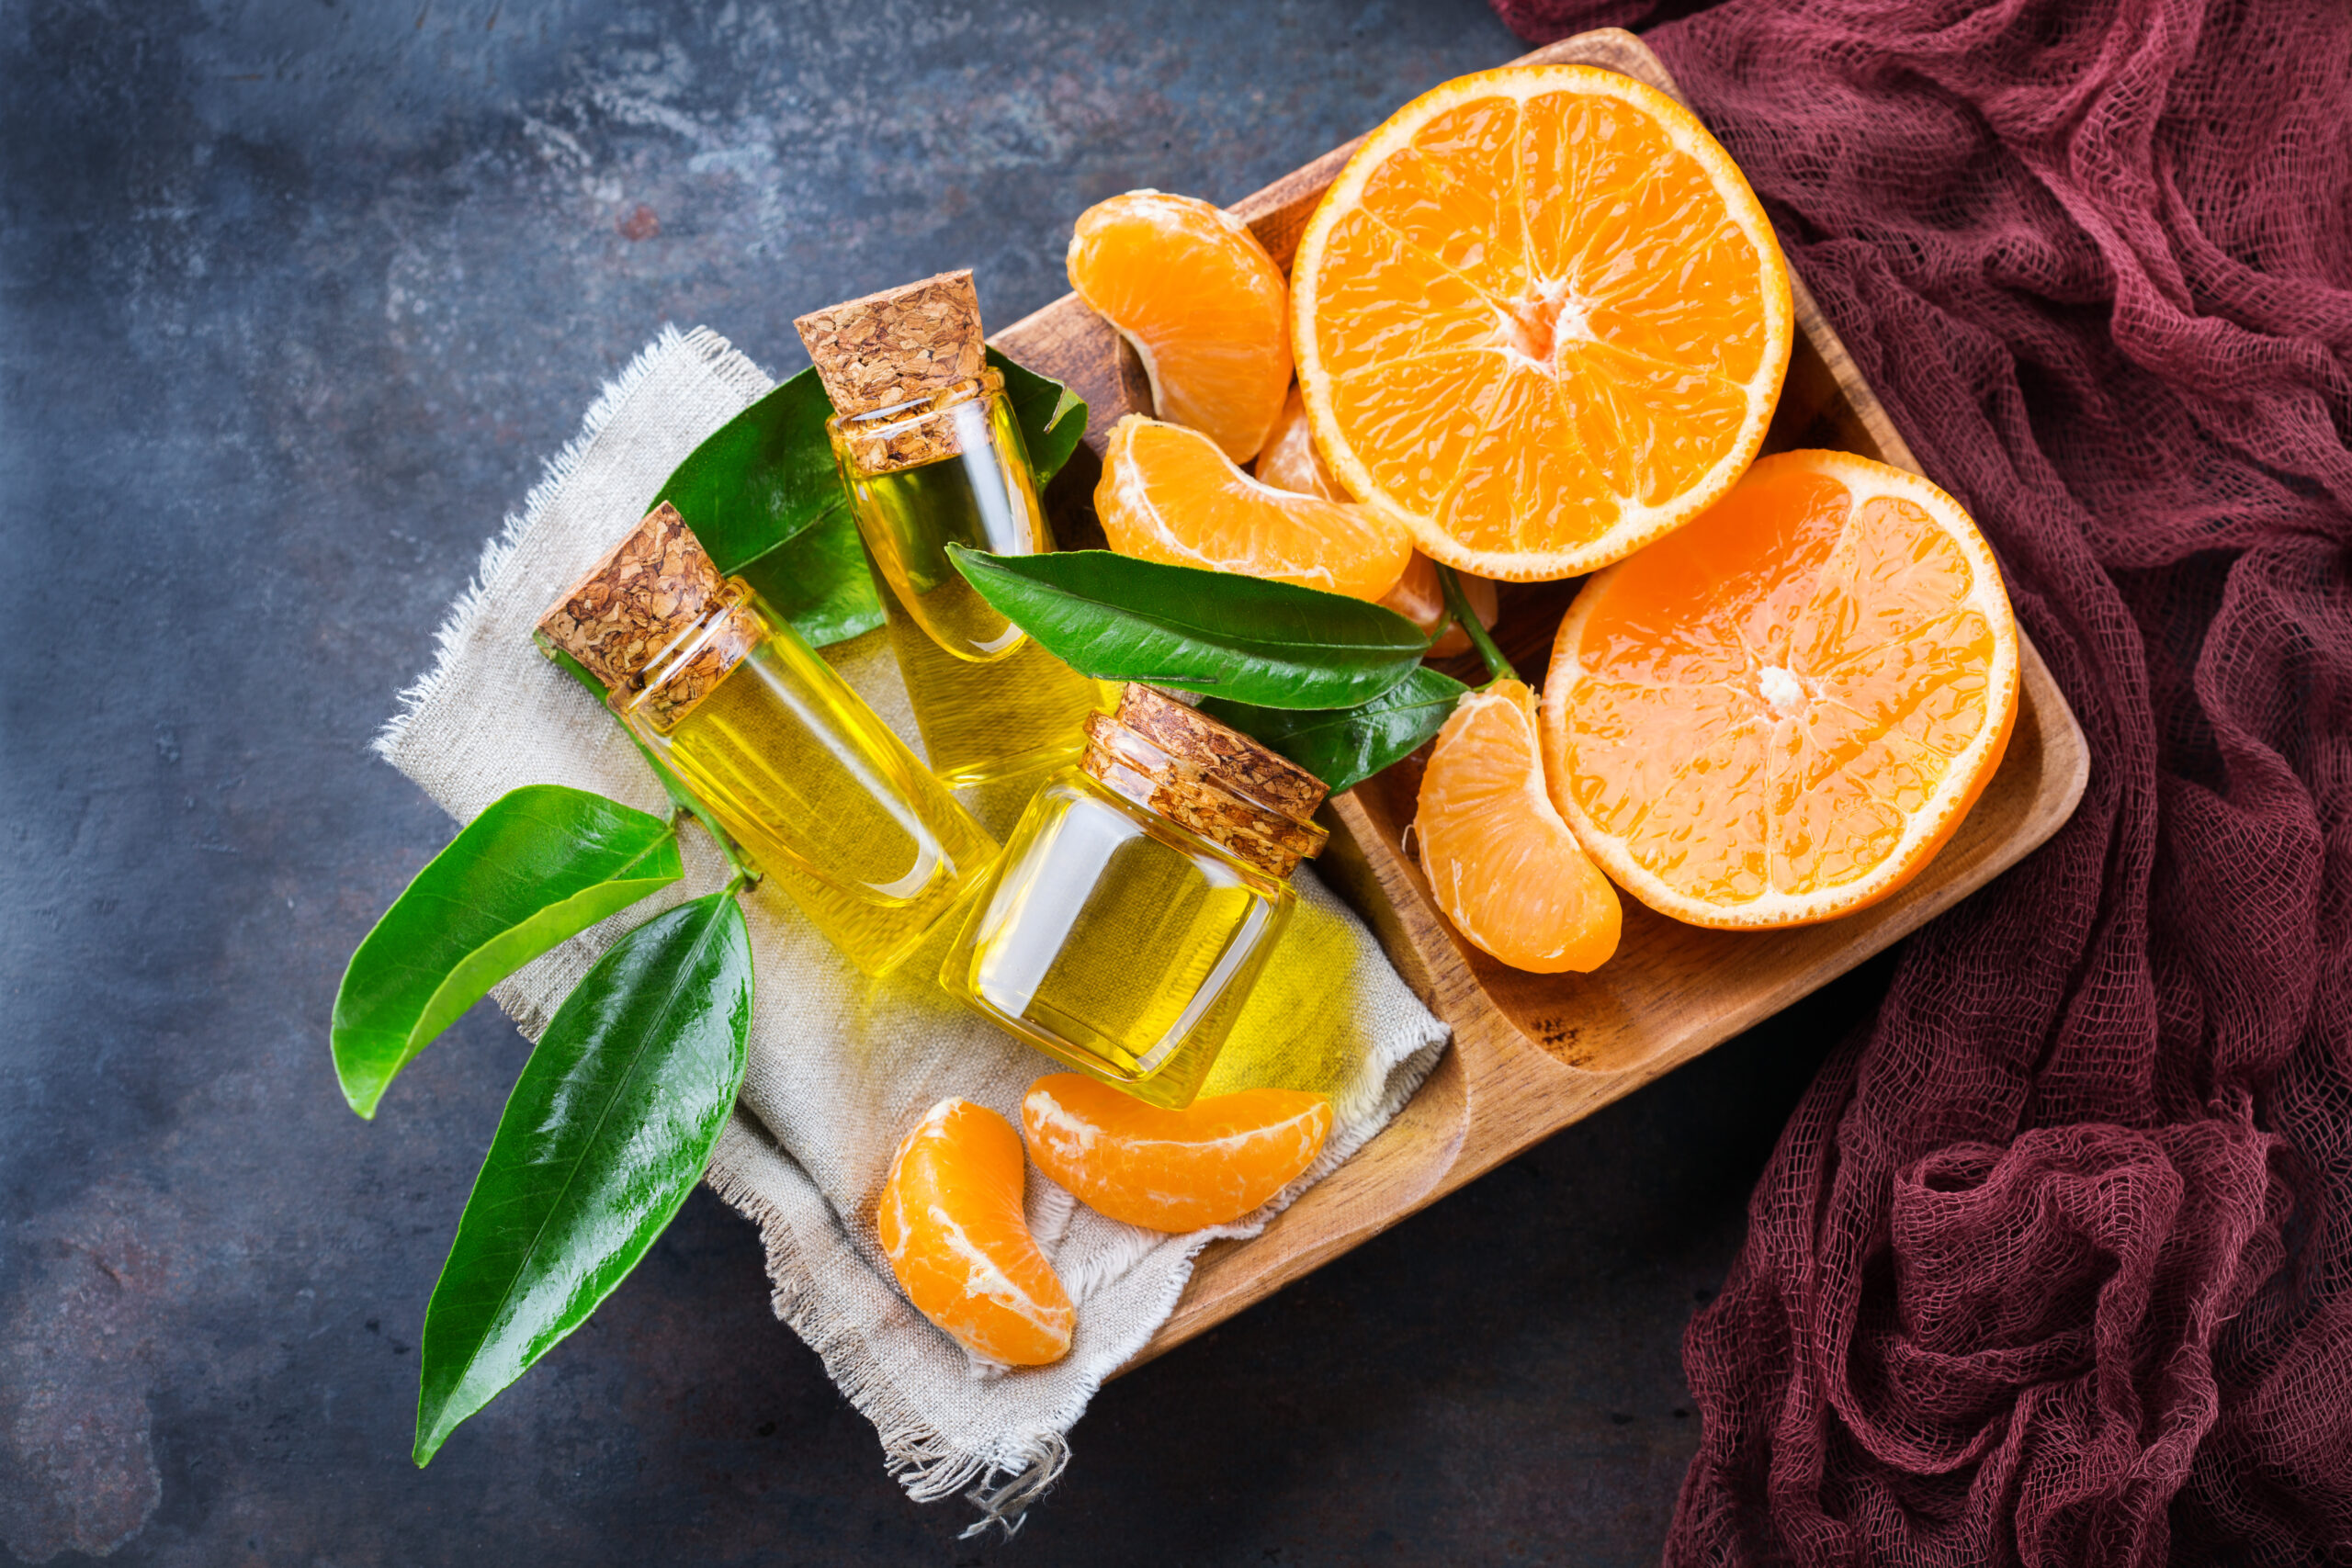 Organic essential tangerine, mandarin, clementine oil